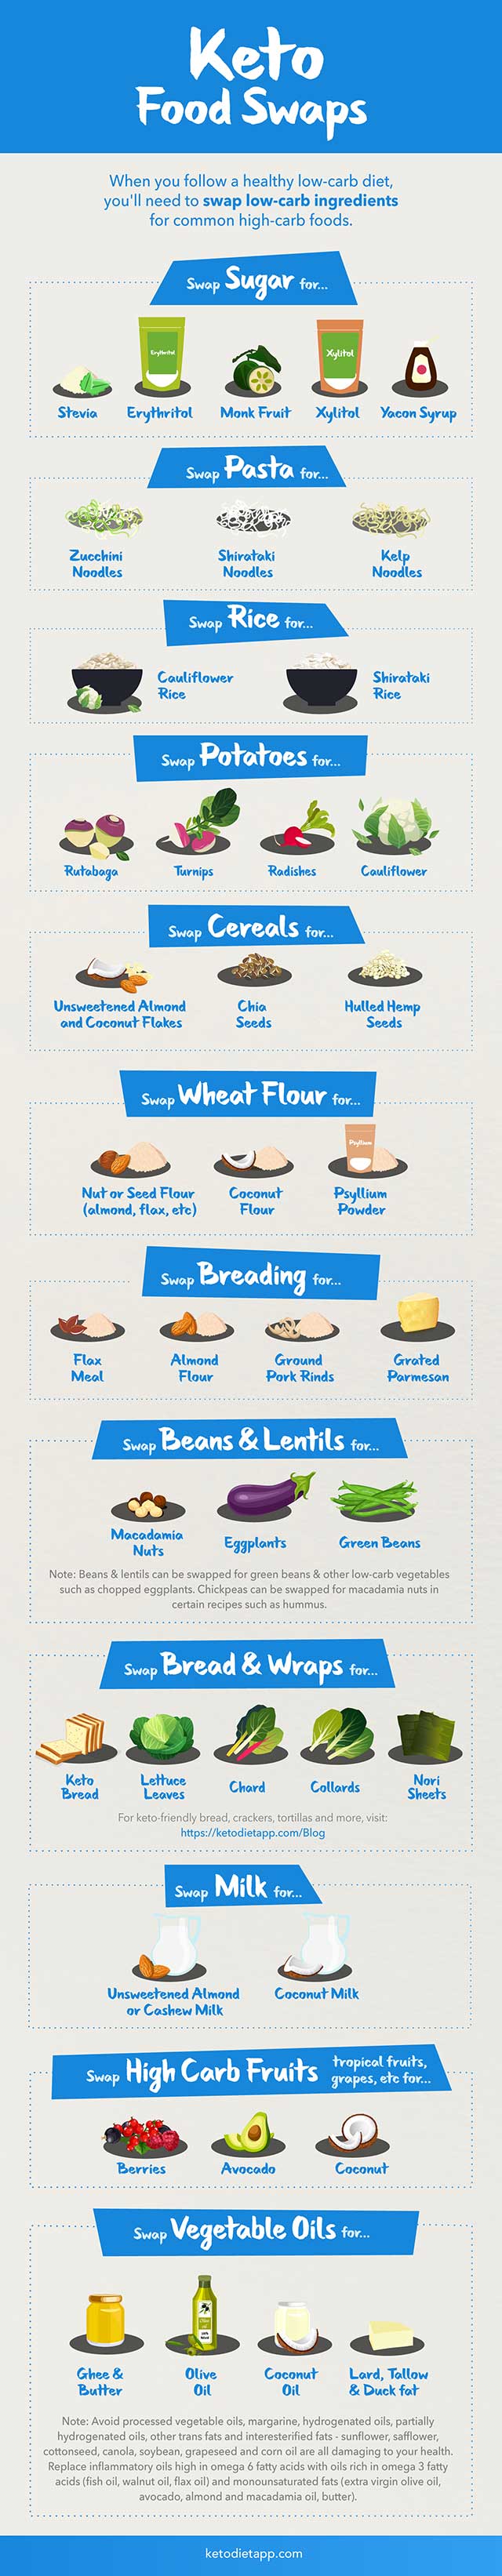 Keto Food Swaps Infographic